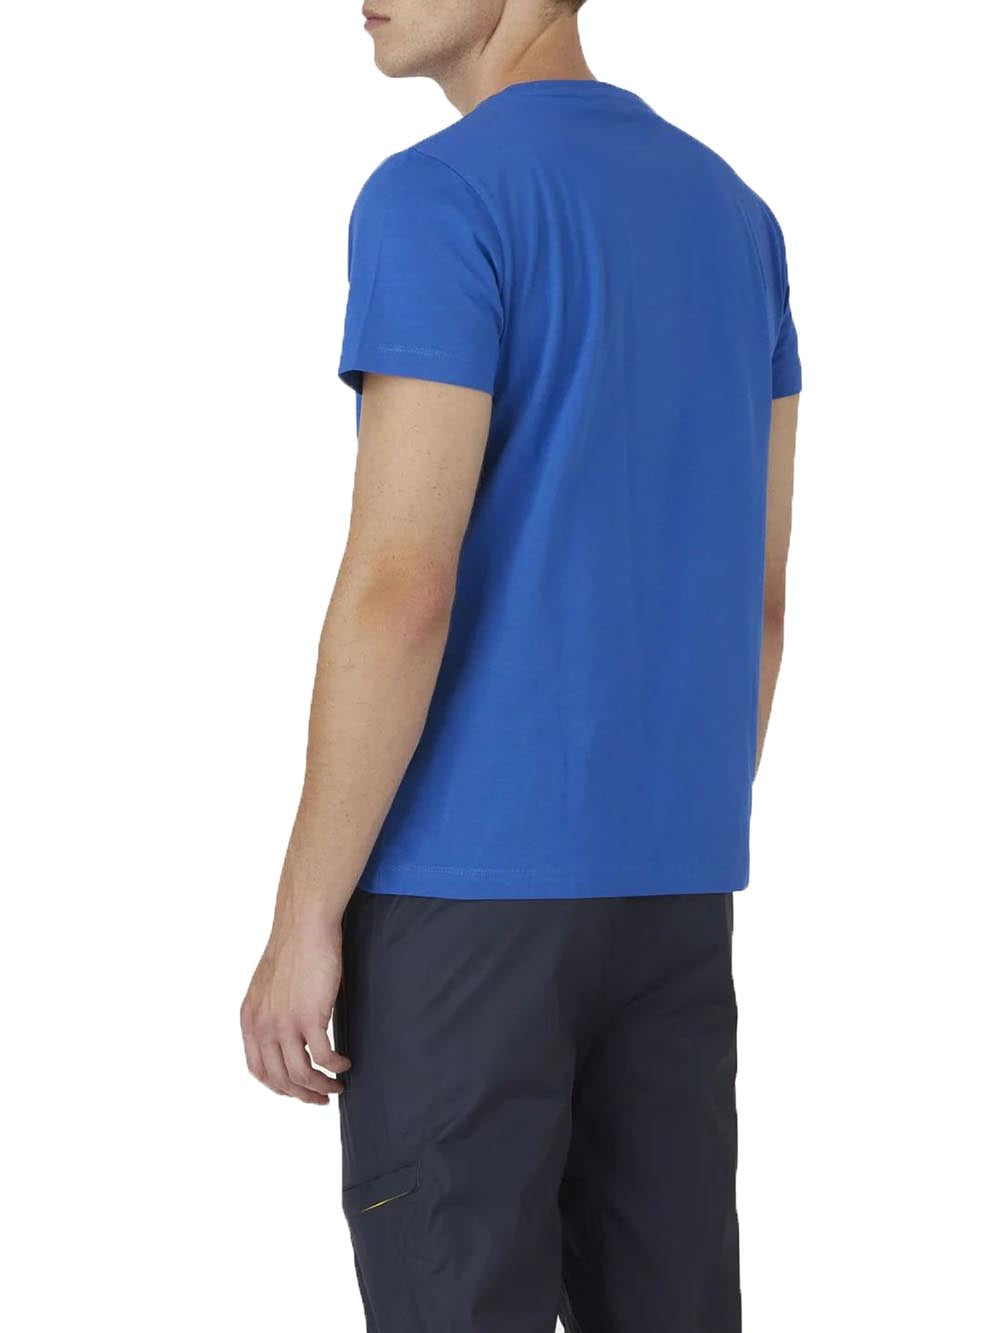 K-Way T-shirt Uomo Bluette